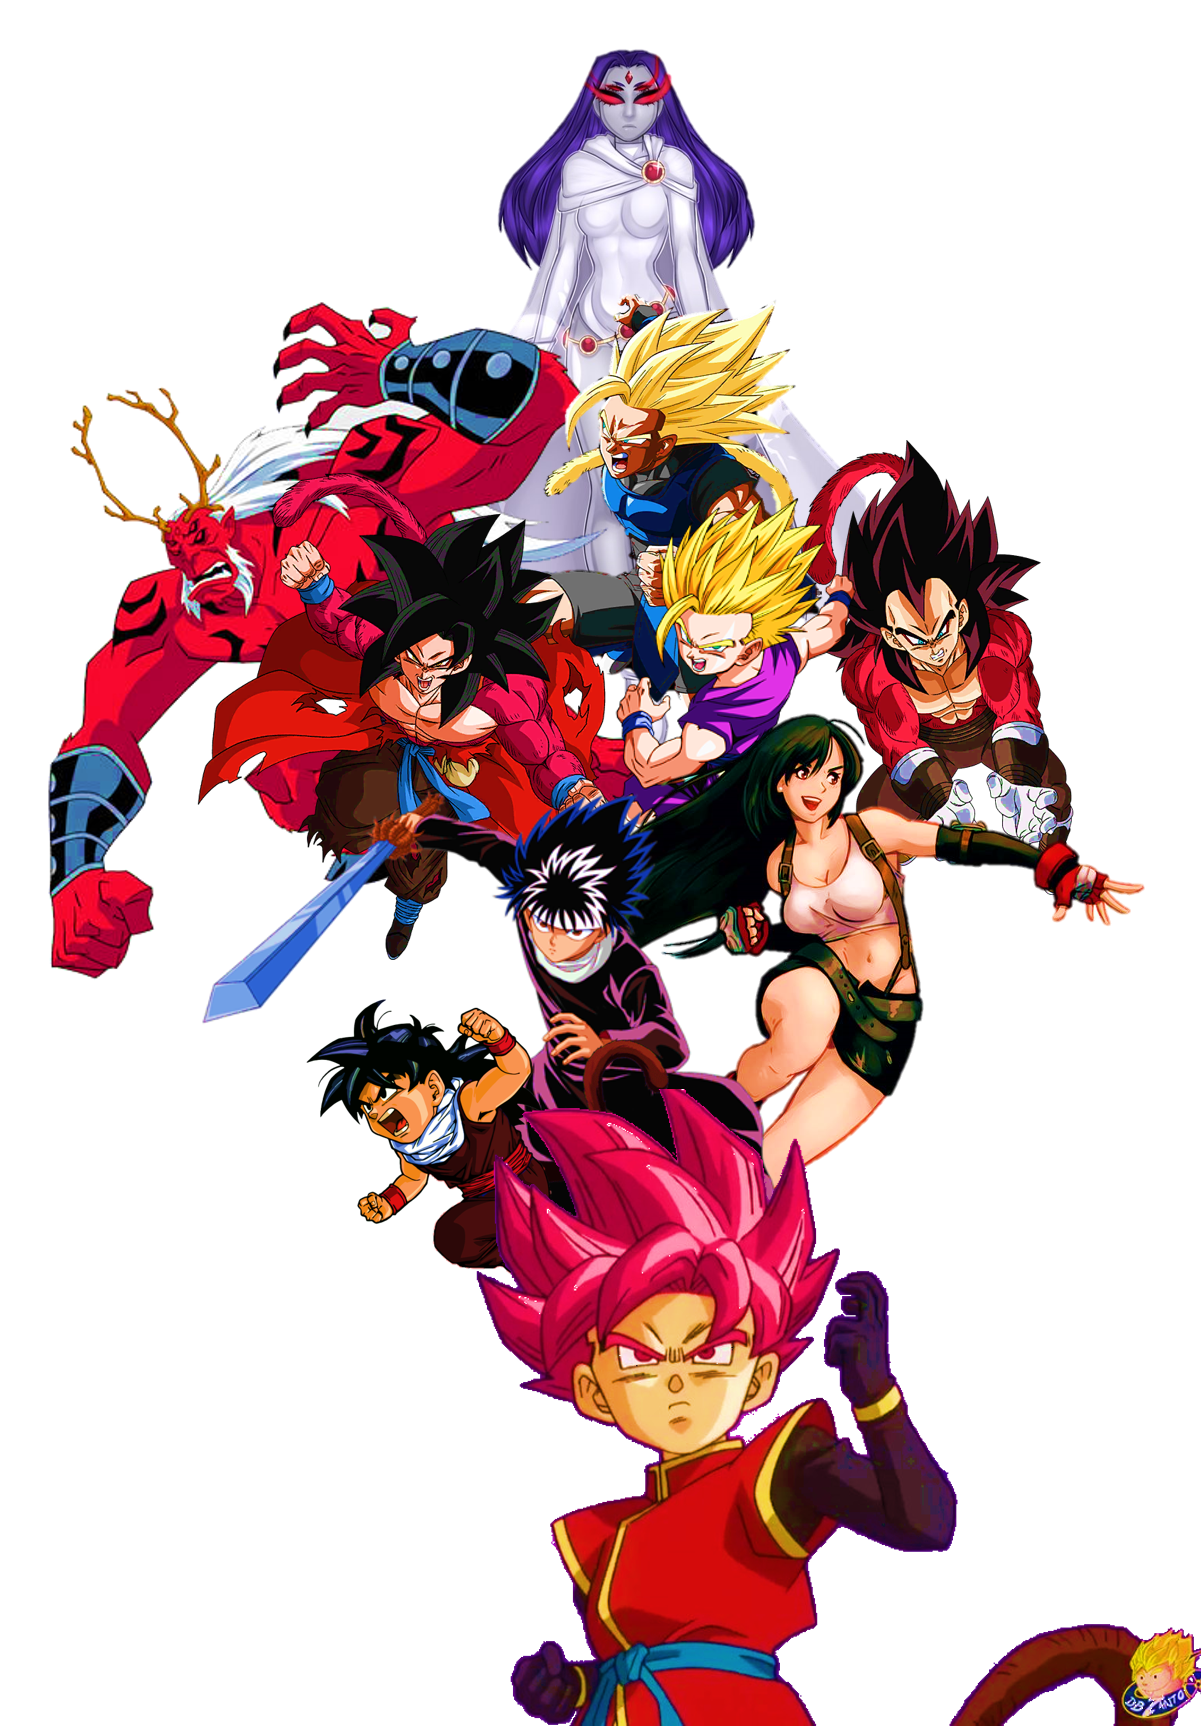 SSJ5 Goku vs UI Goku, who would win? : r/Dragonballsuper